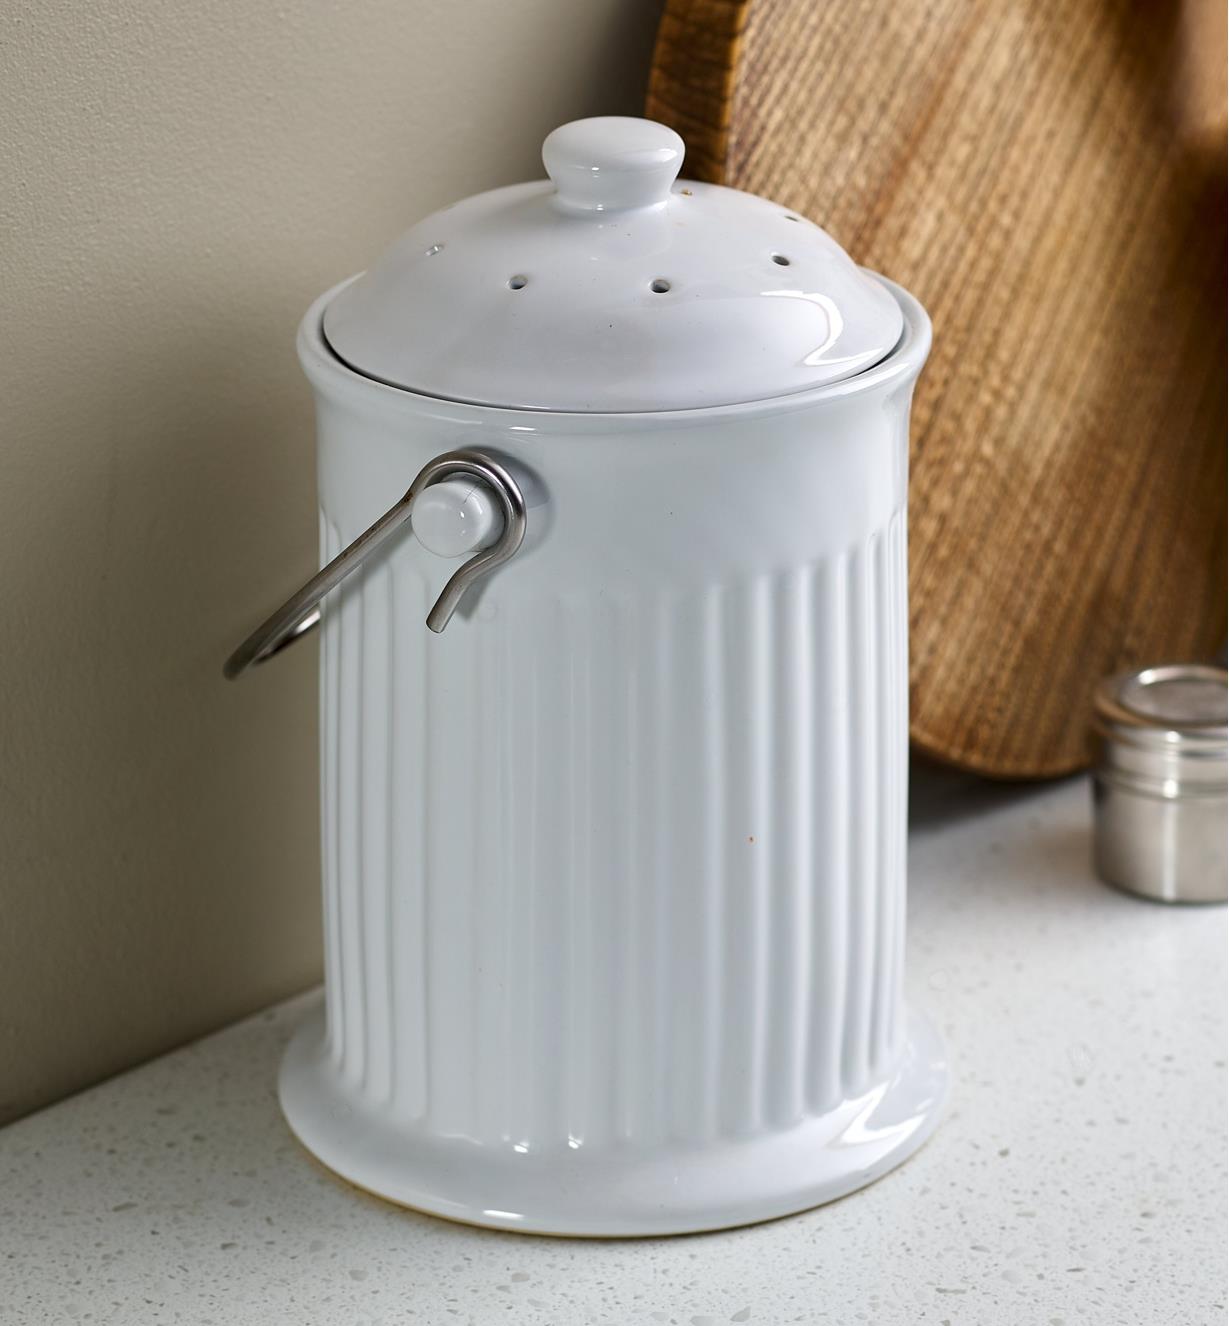 A porcelain compost pail on a kitchen countertop